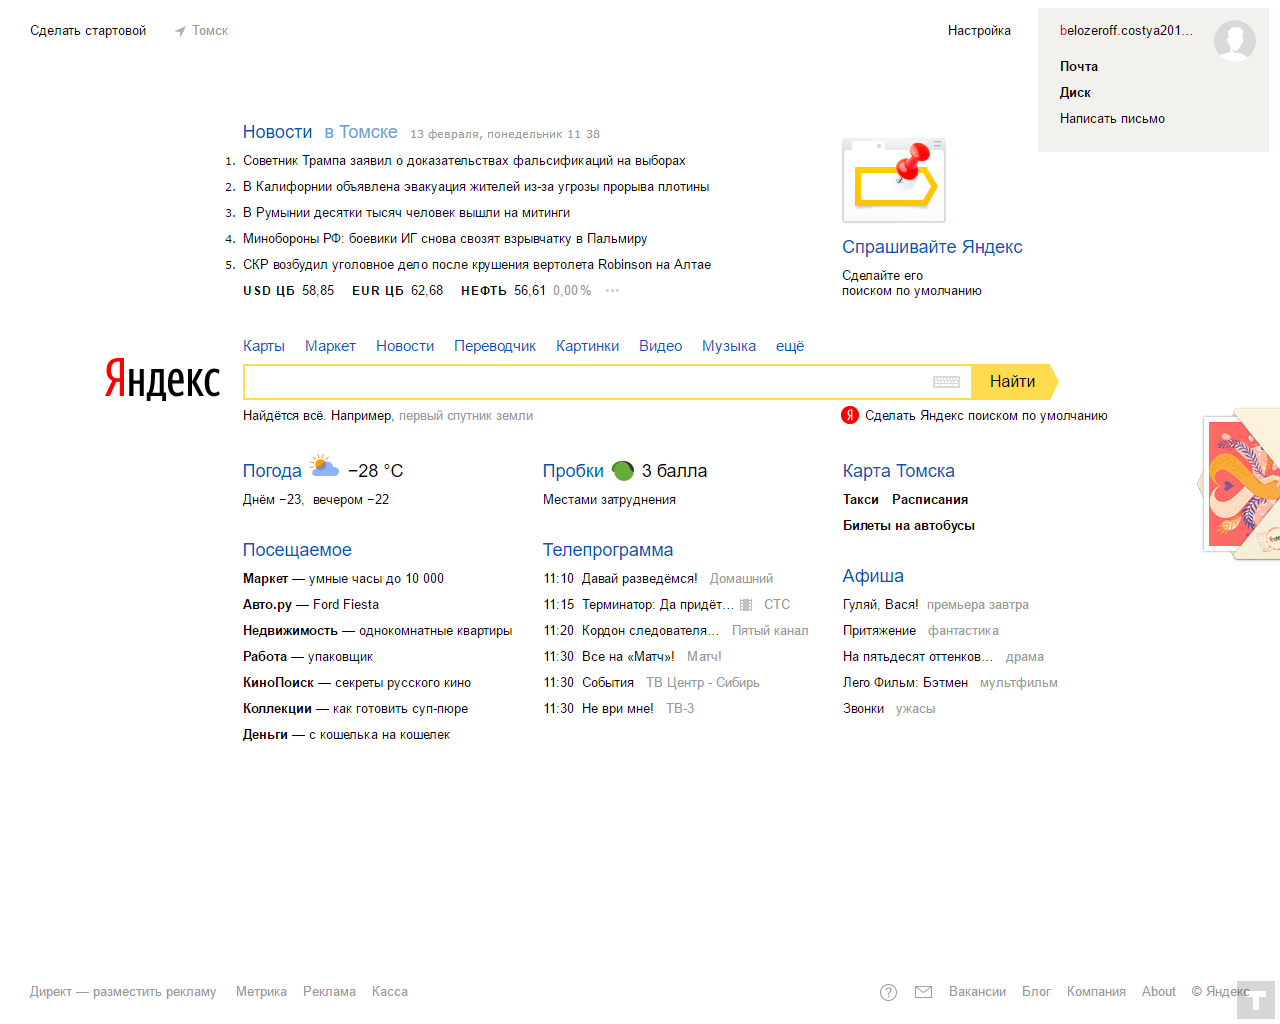 Главная страница Яндекса